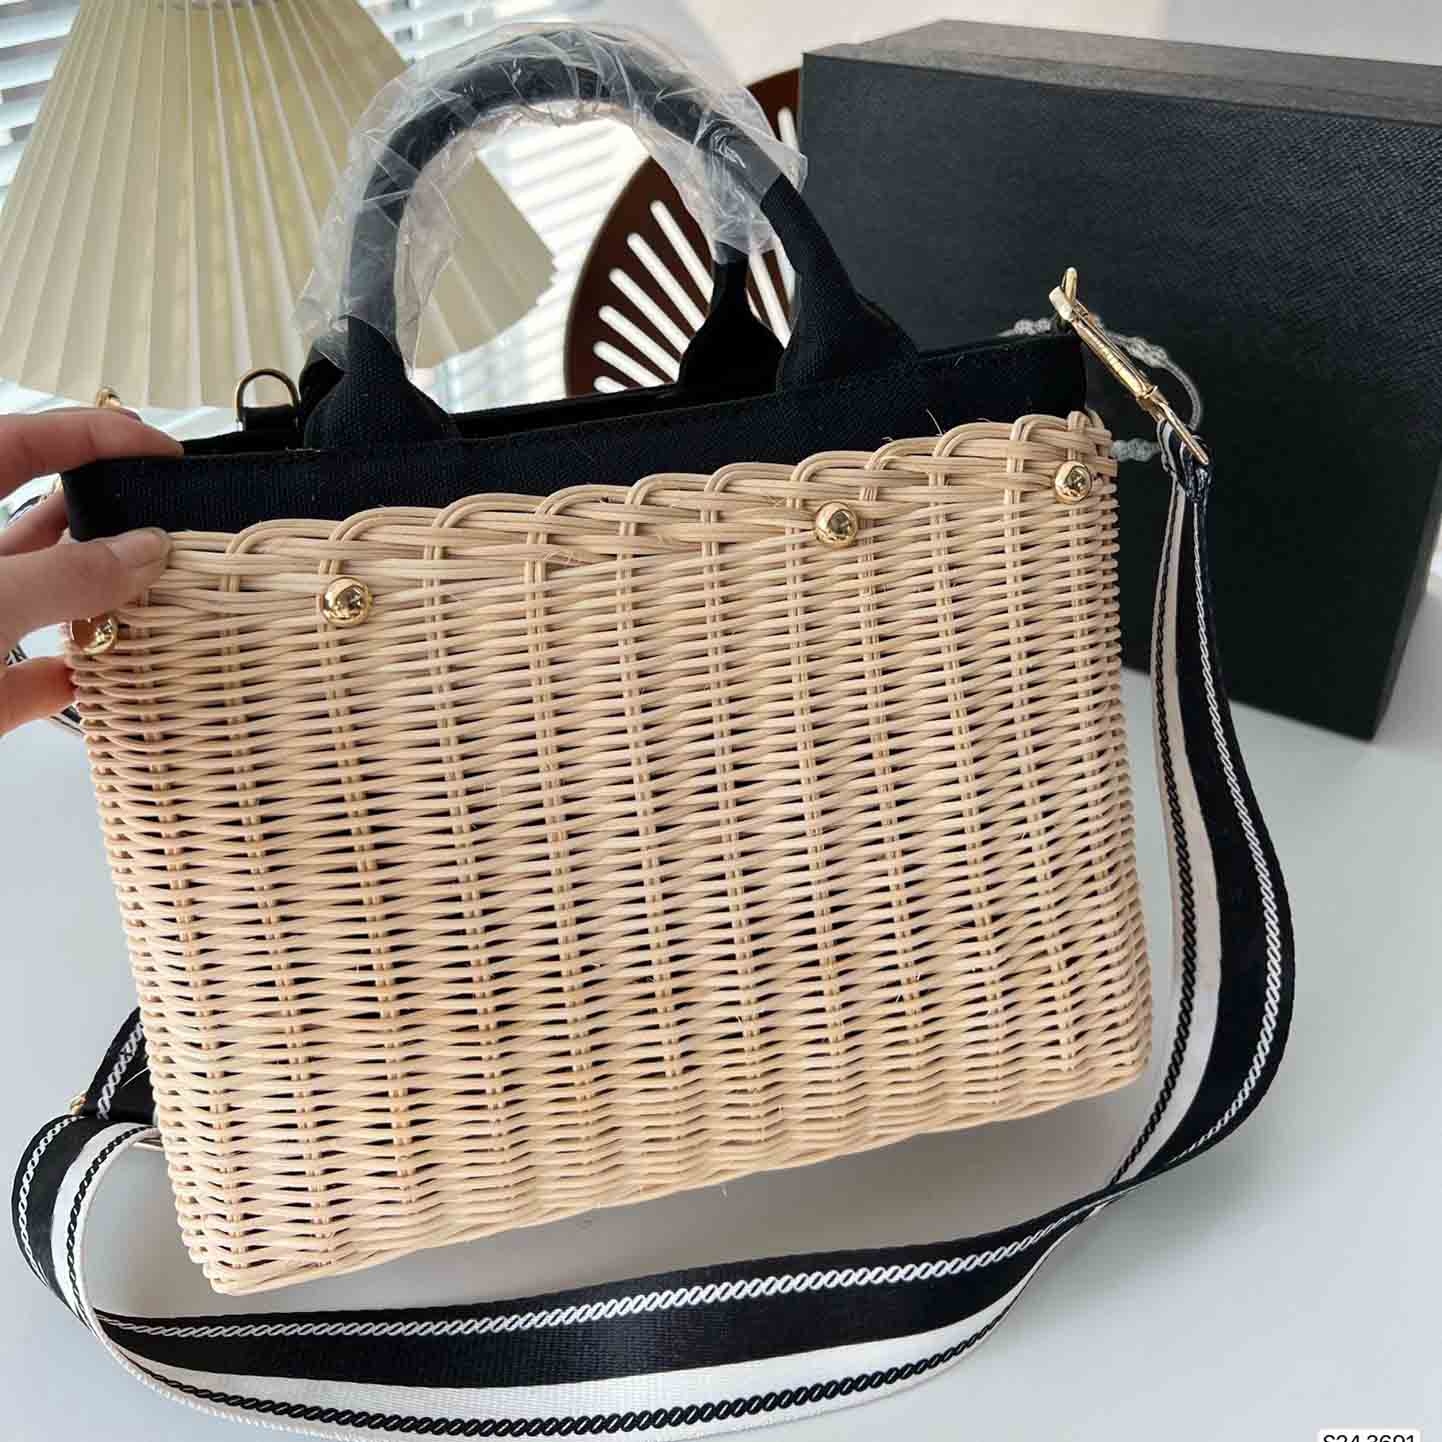 Beach bag designer advanced straw woven tote summer sunshine holiday shopping bags luxury crossbody shoulder handbag with strap